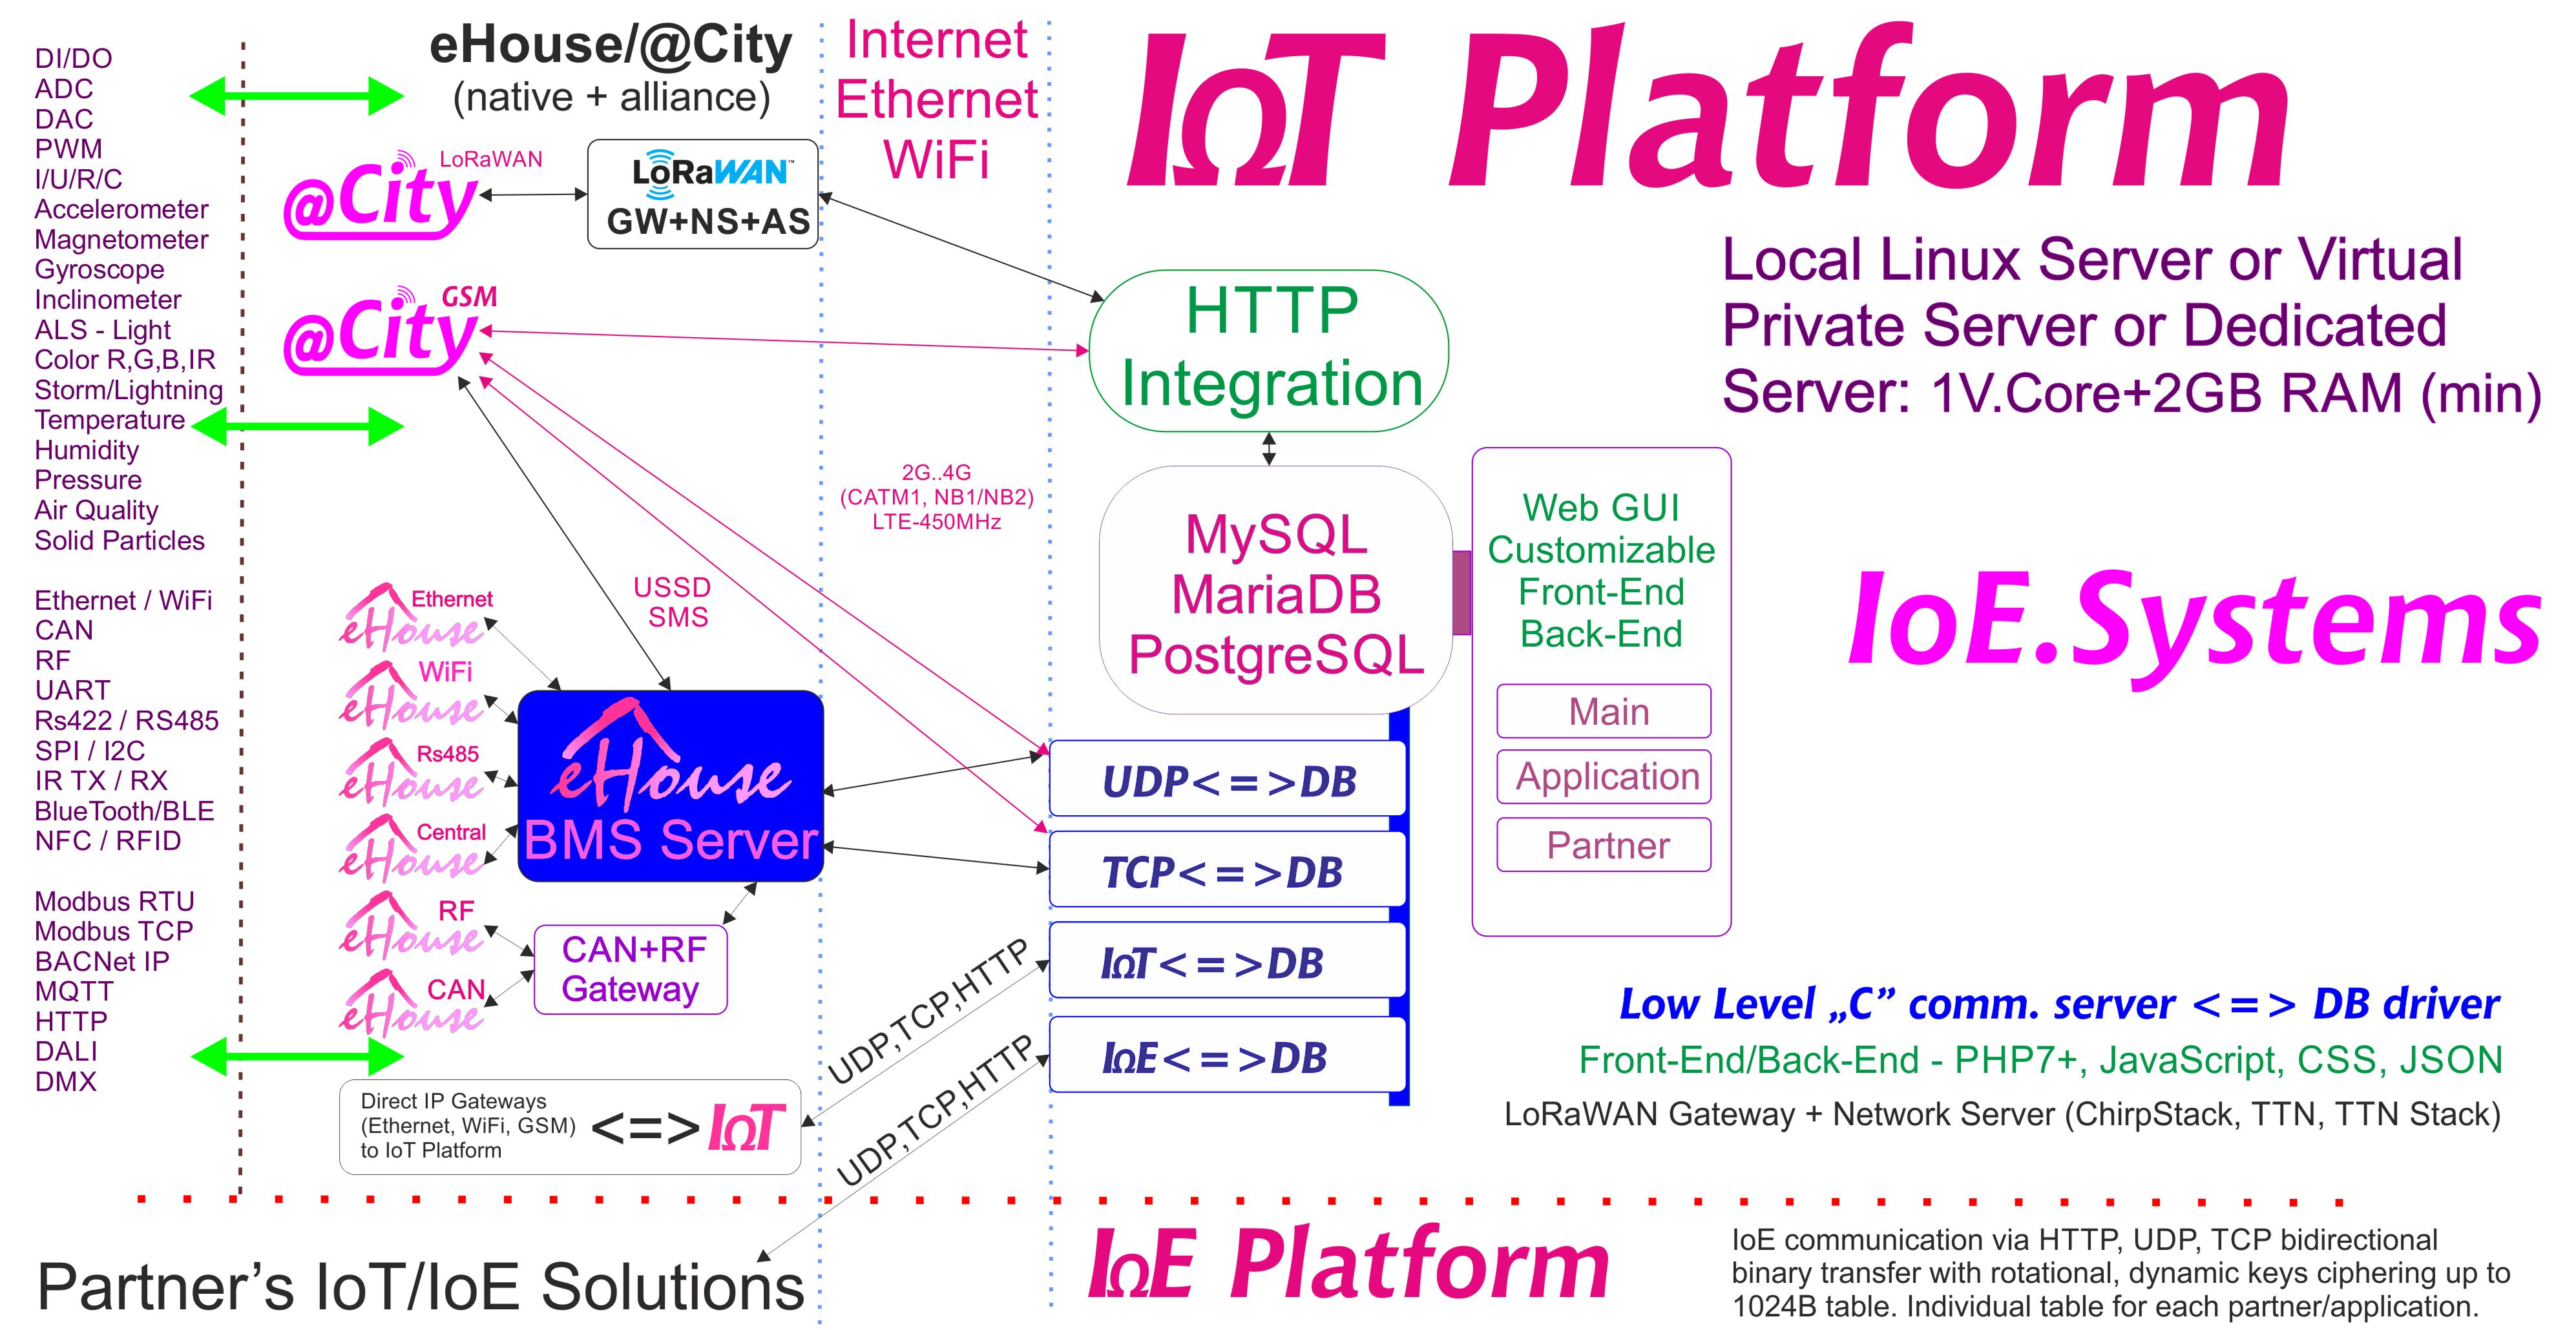 eHouse, eCity Server Software BAS, BMS, IoE, IoT Sistemak eta Plataforma